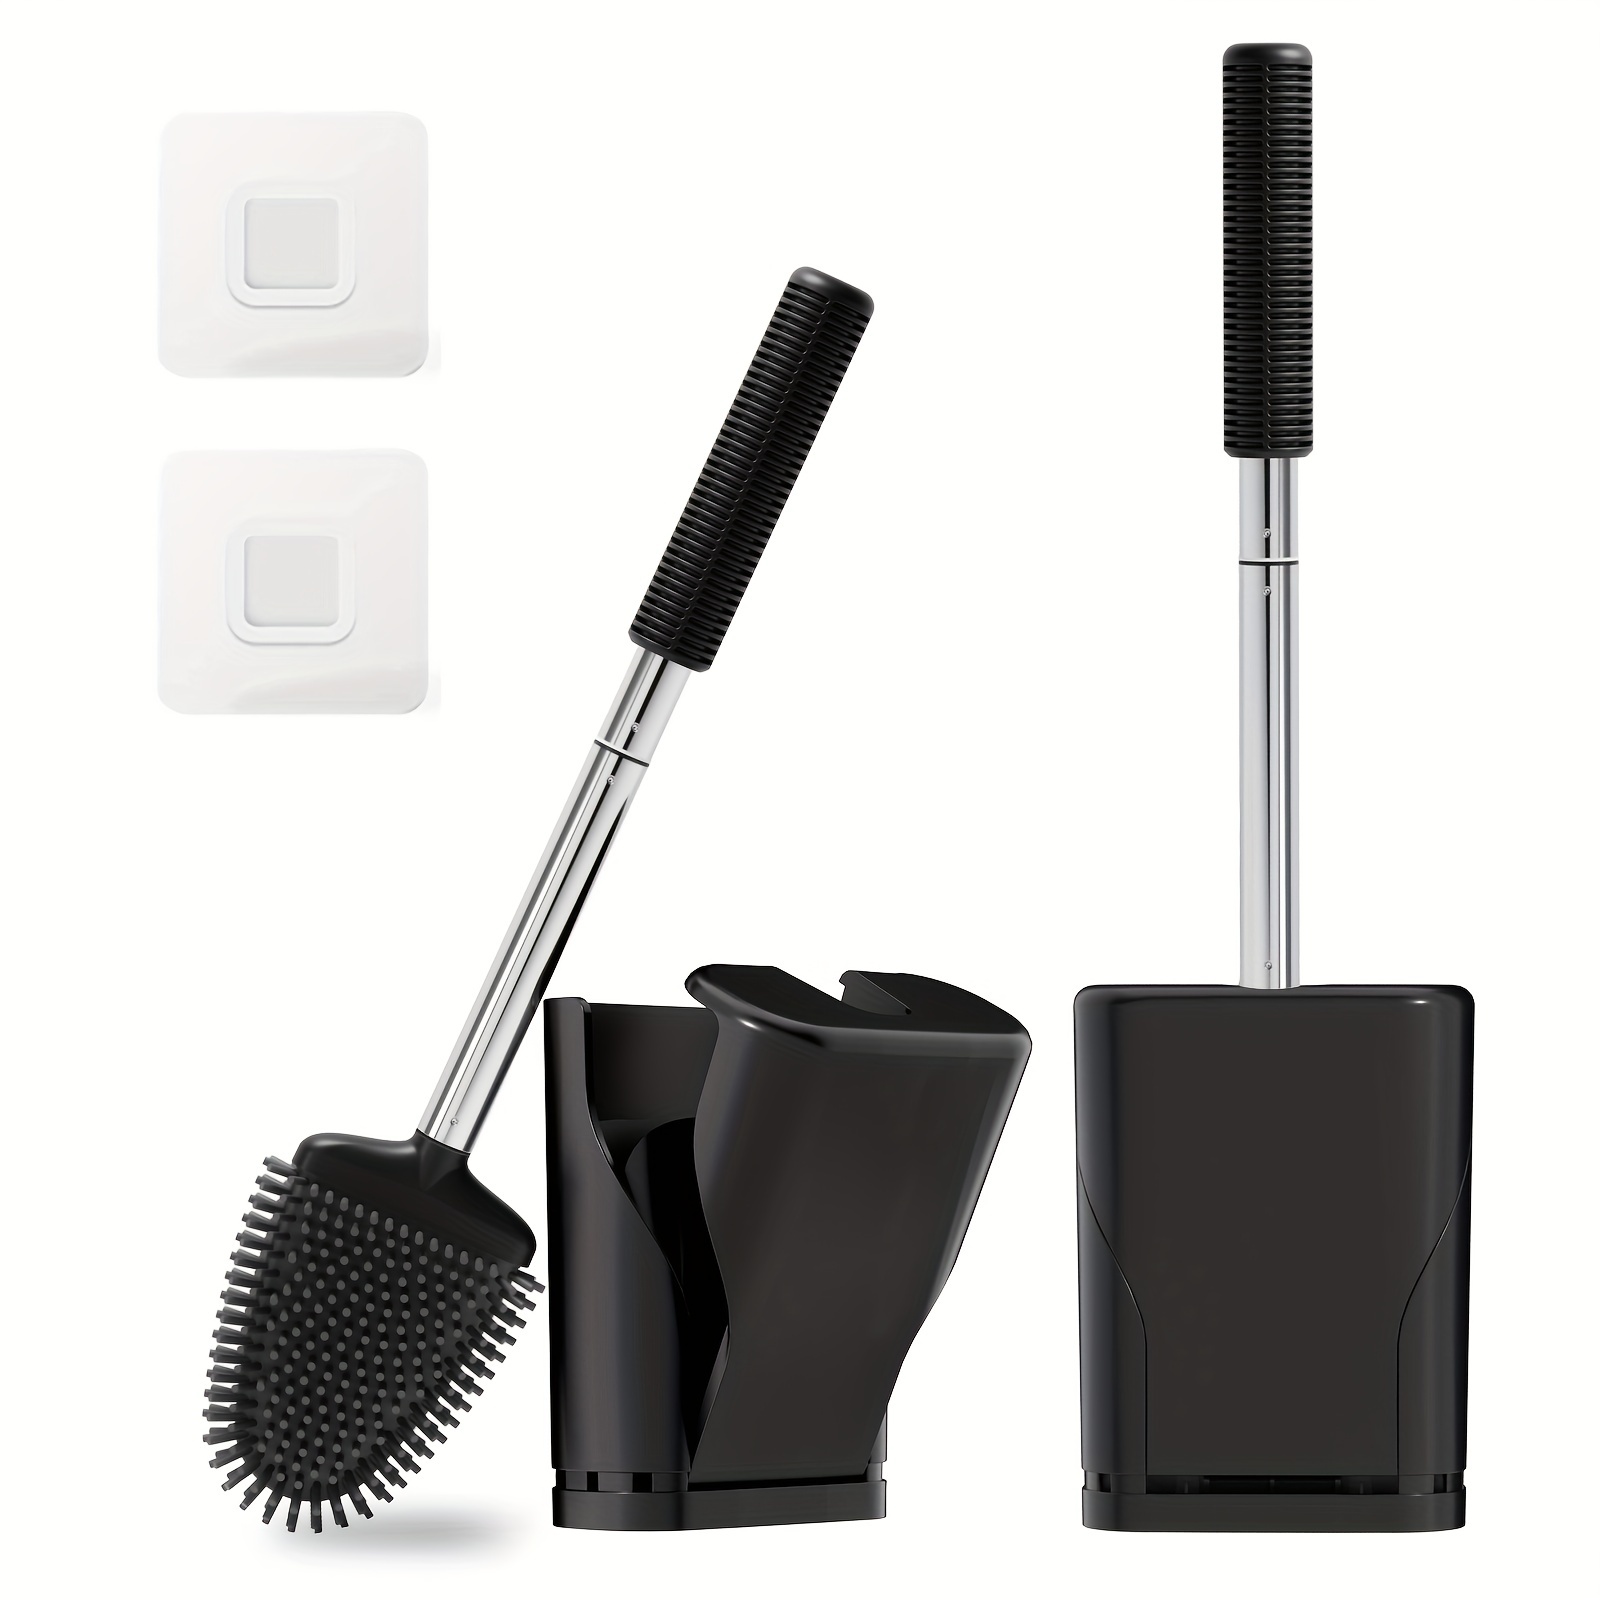 Silicone Toilet Brush With Holder Set Toilet Bowl Brush For